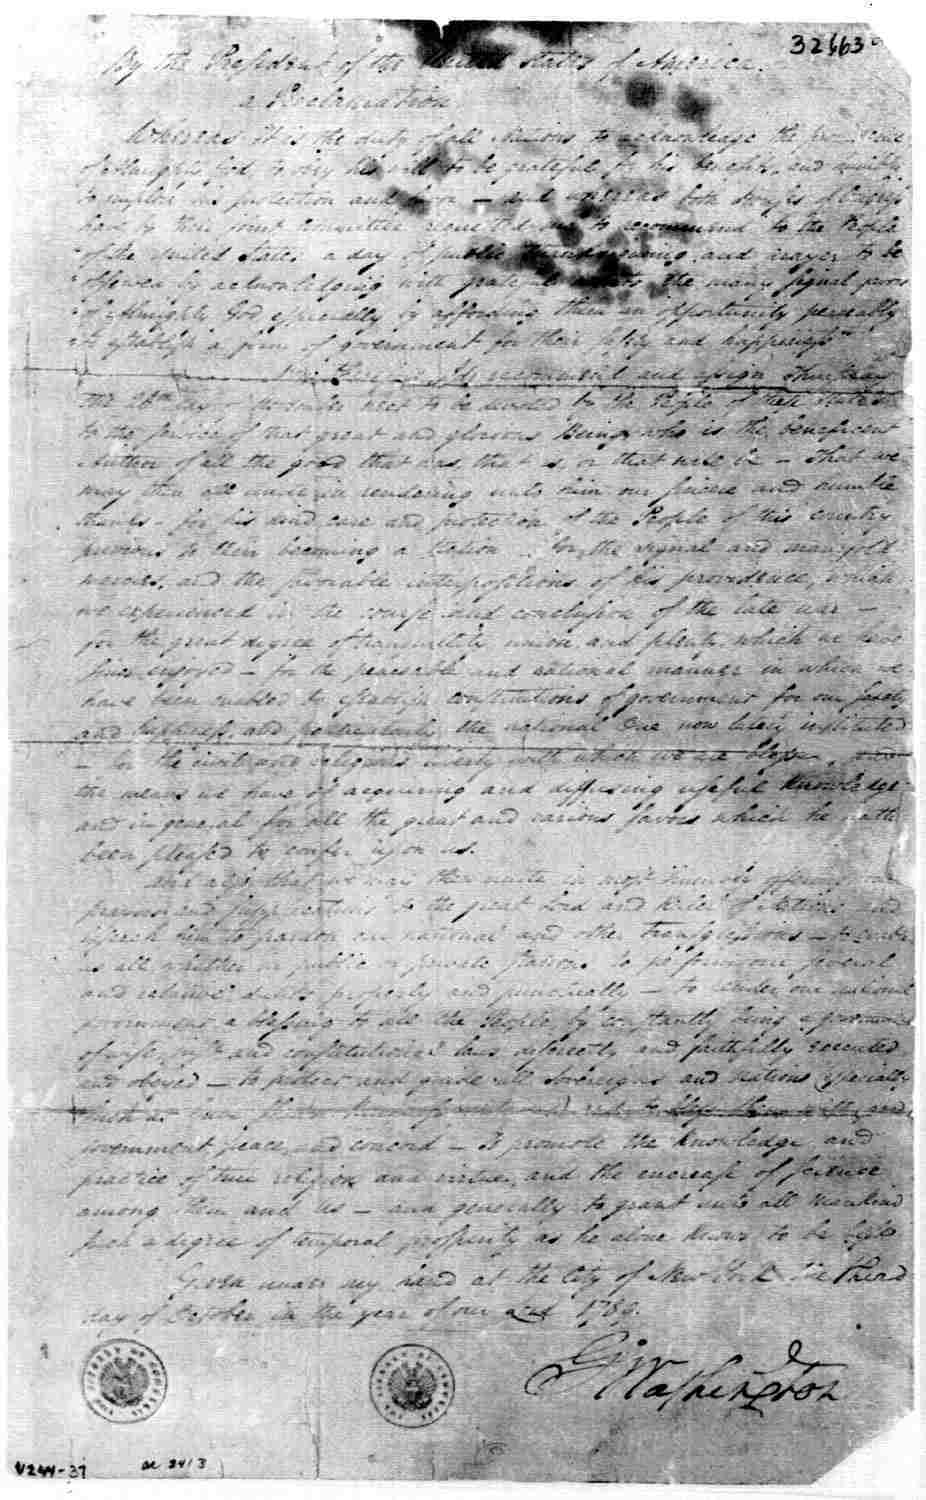 Original copy of George Washington's Thanksgiving Proclamation